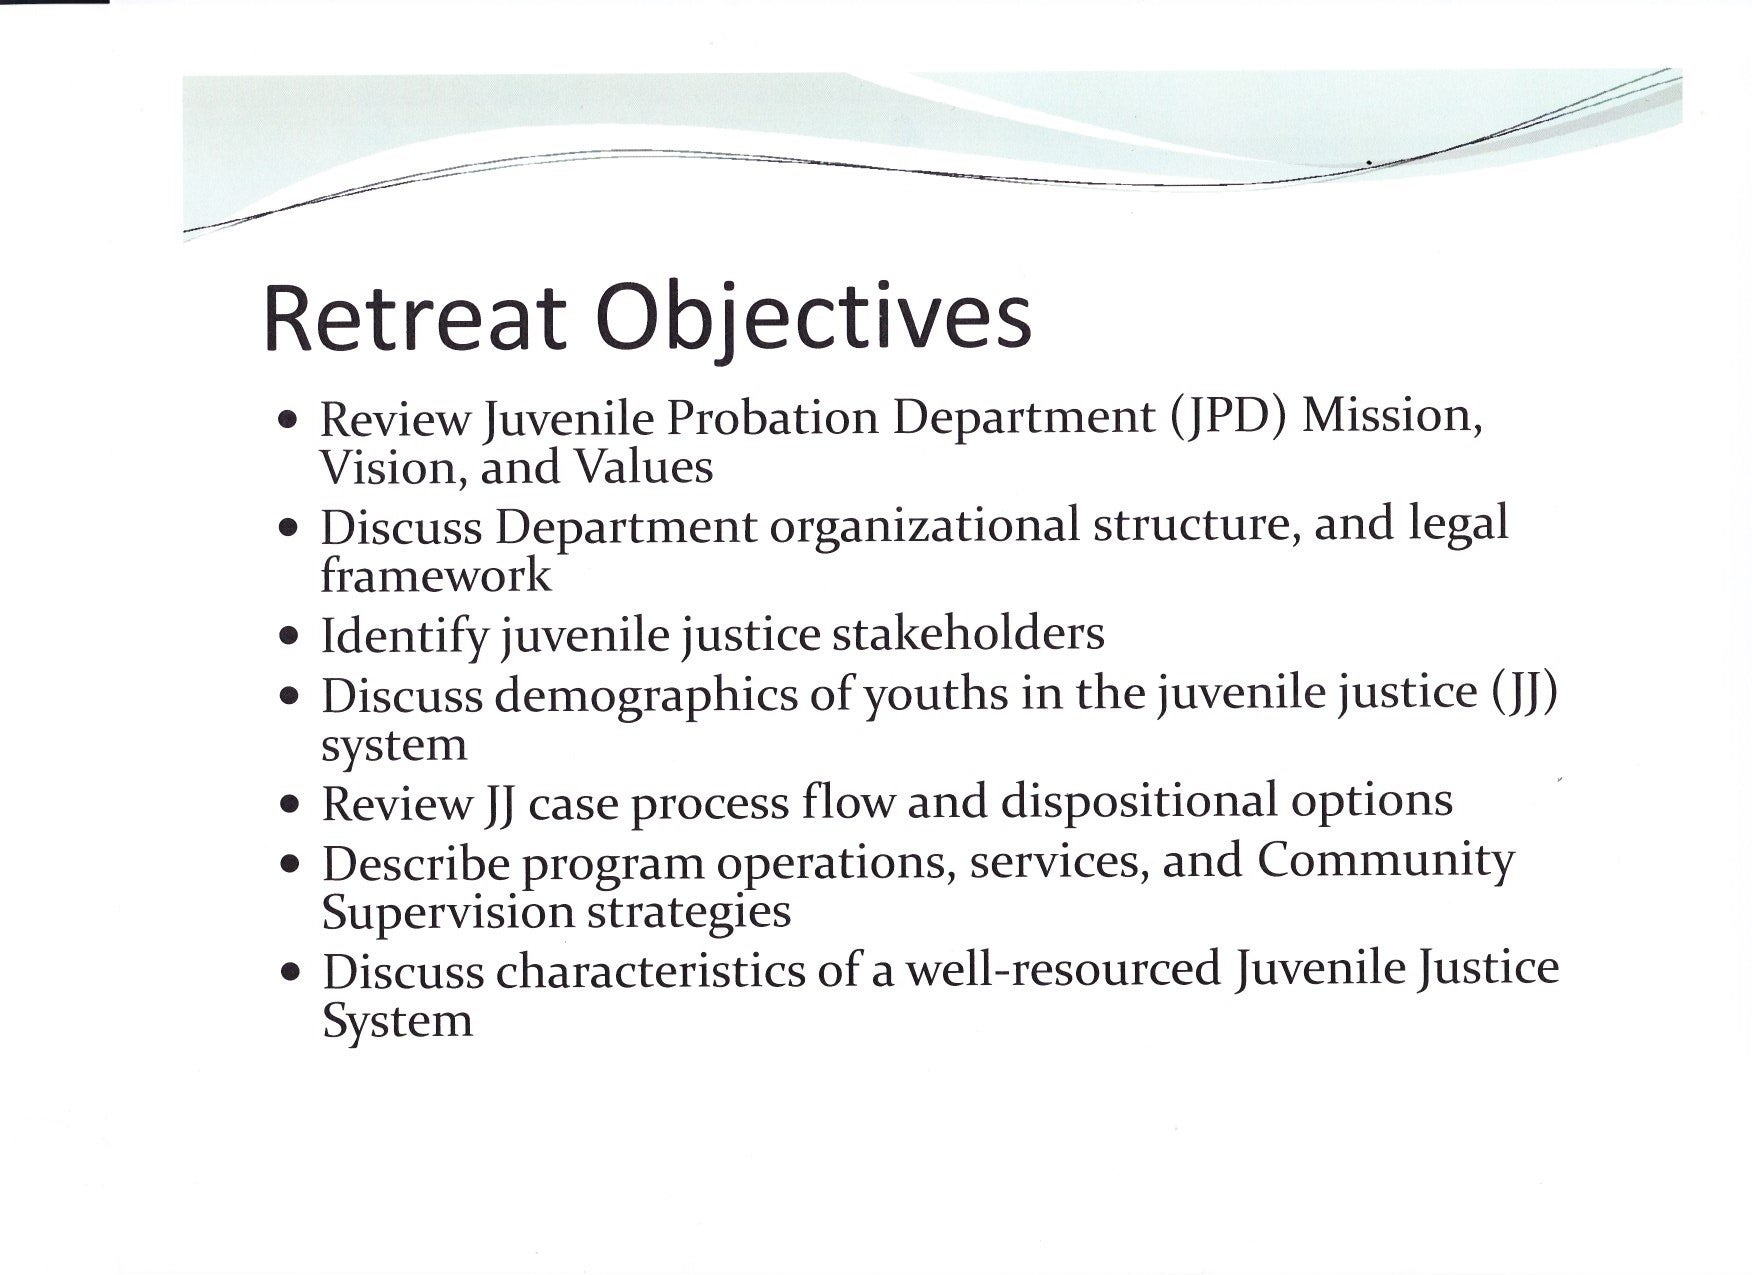 JPD Retreat Objectives